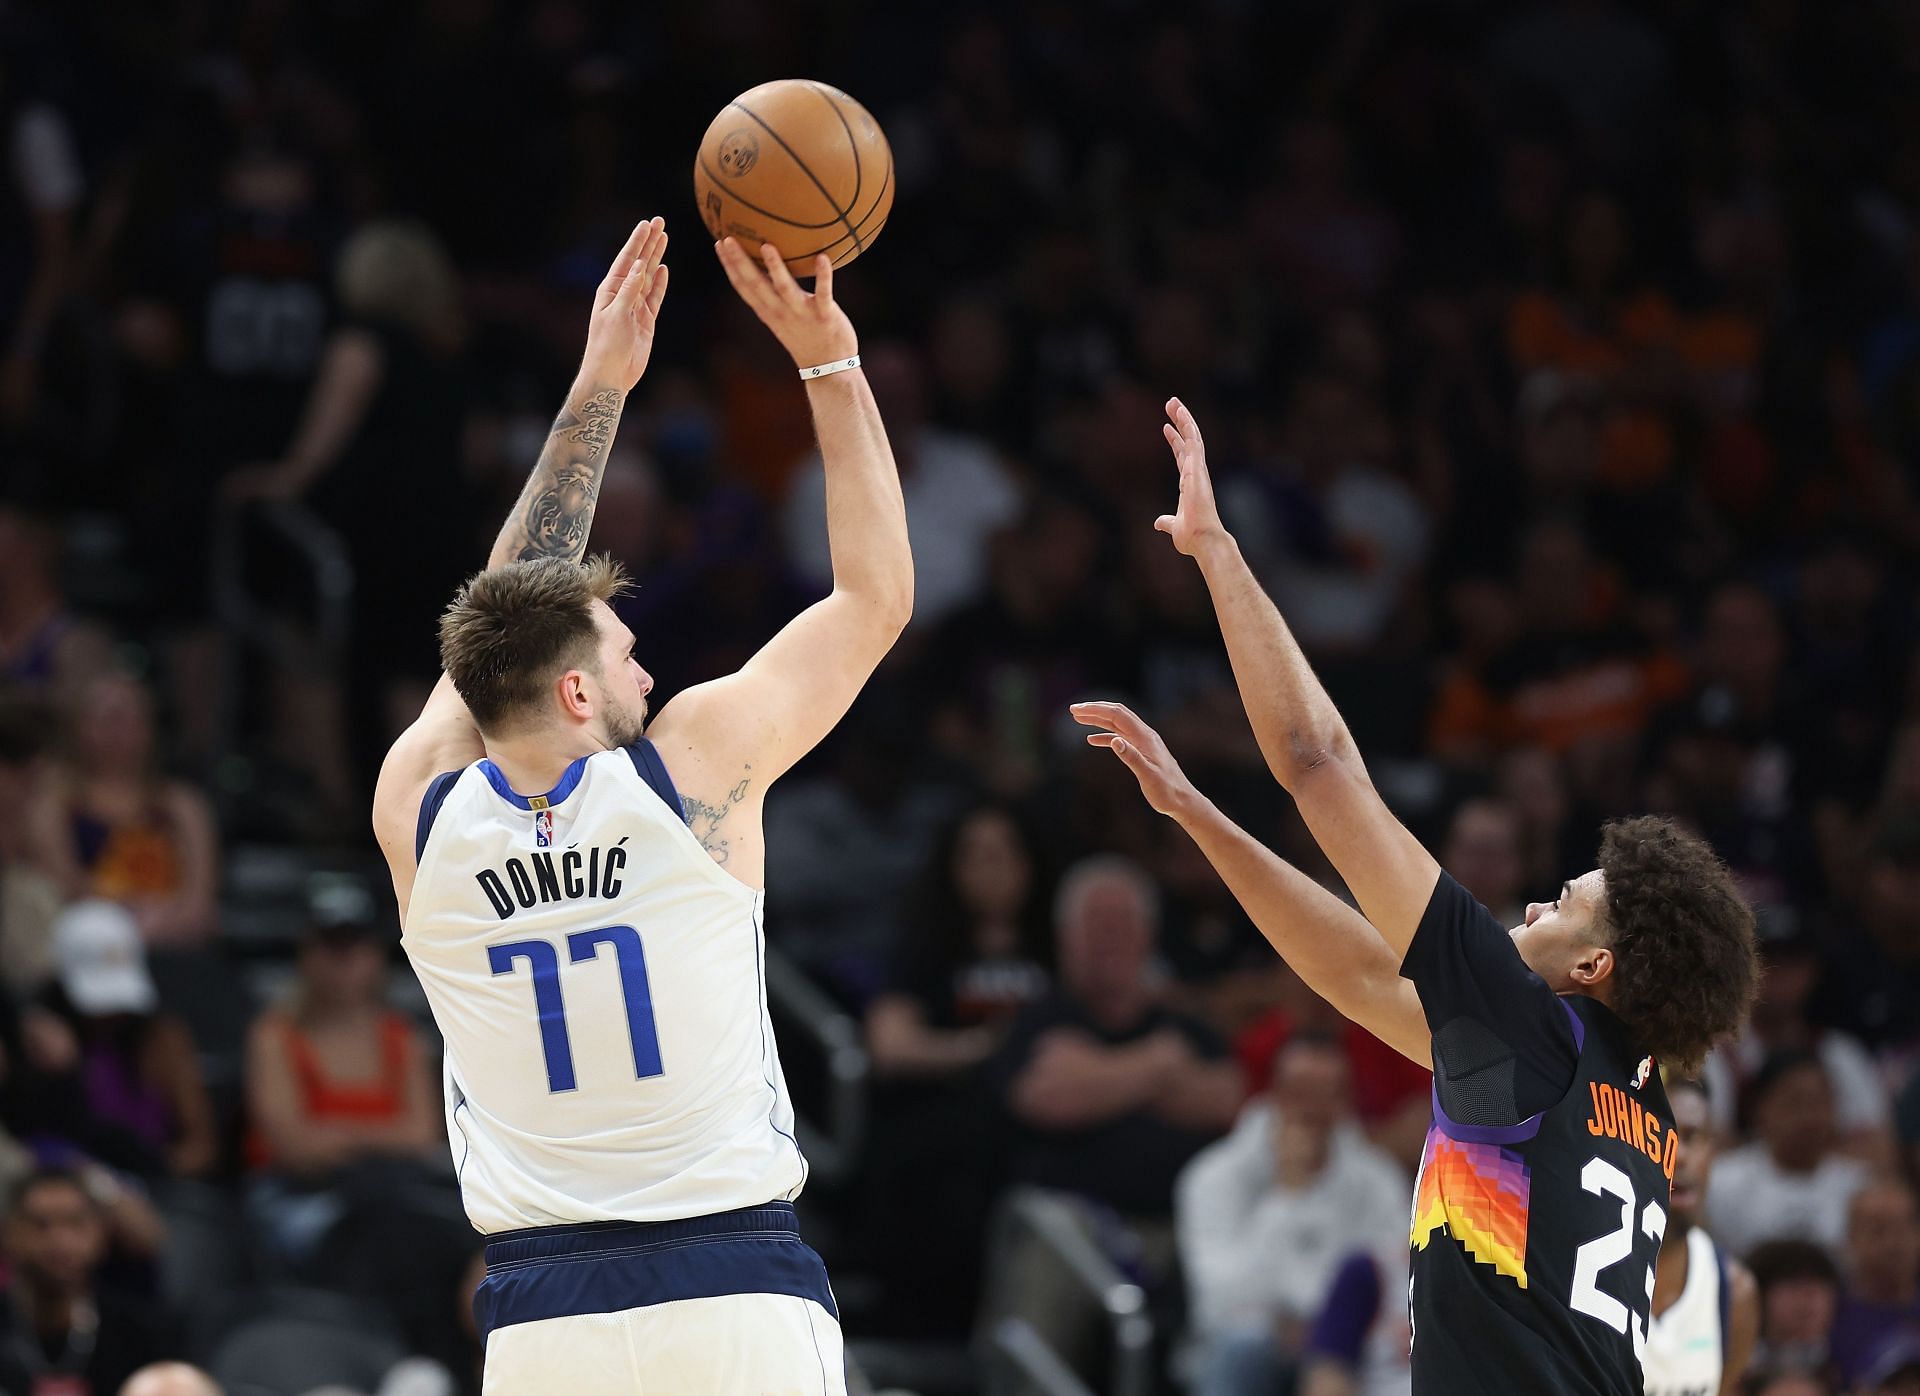 Luka Doncic of the Dallas Mavericks shoots over Cameron Johnson of the Phoenix Suns